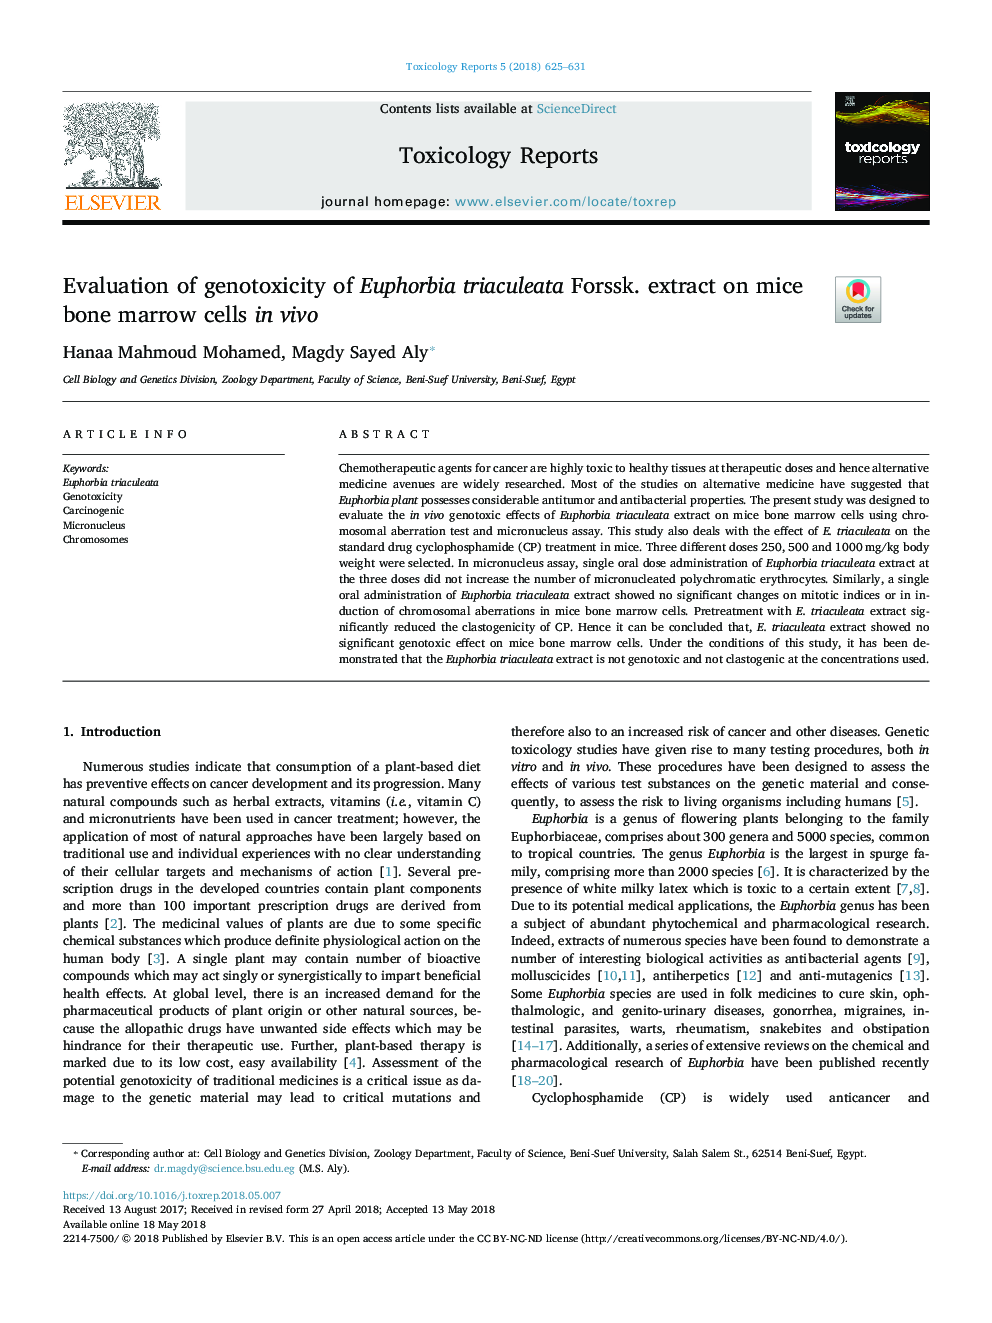 Evaluation of genotoxicity of Euphorbia triaculeata Forssk. extract on mice bone marrow cells in vivo